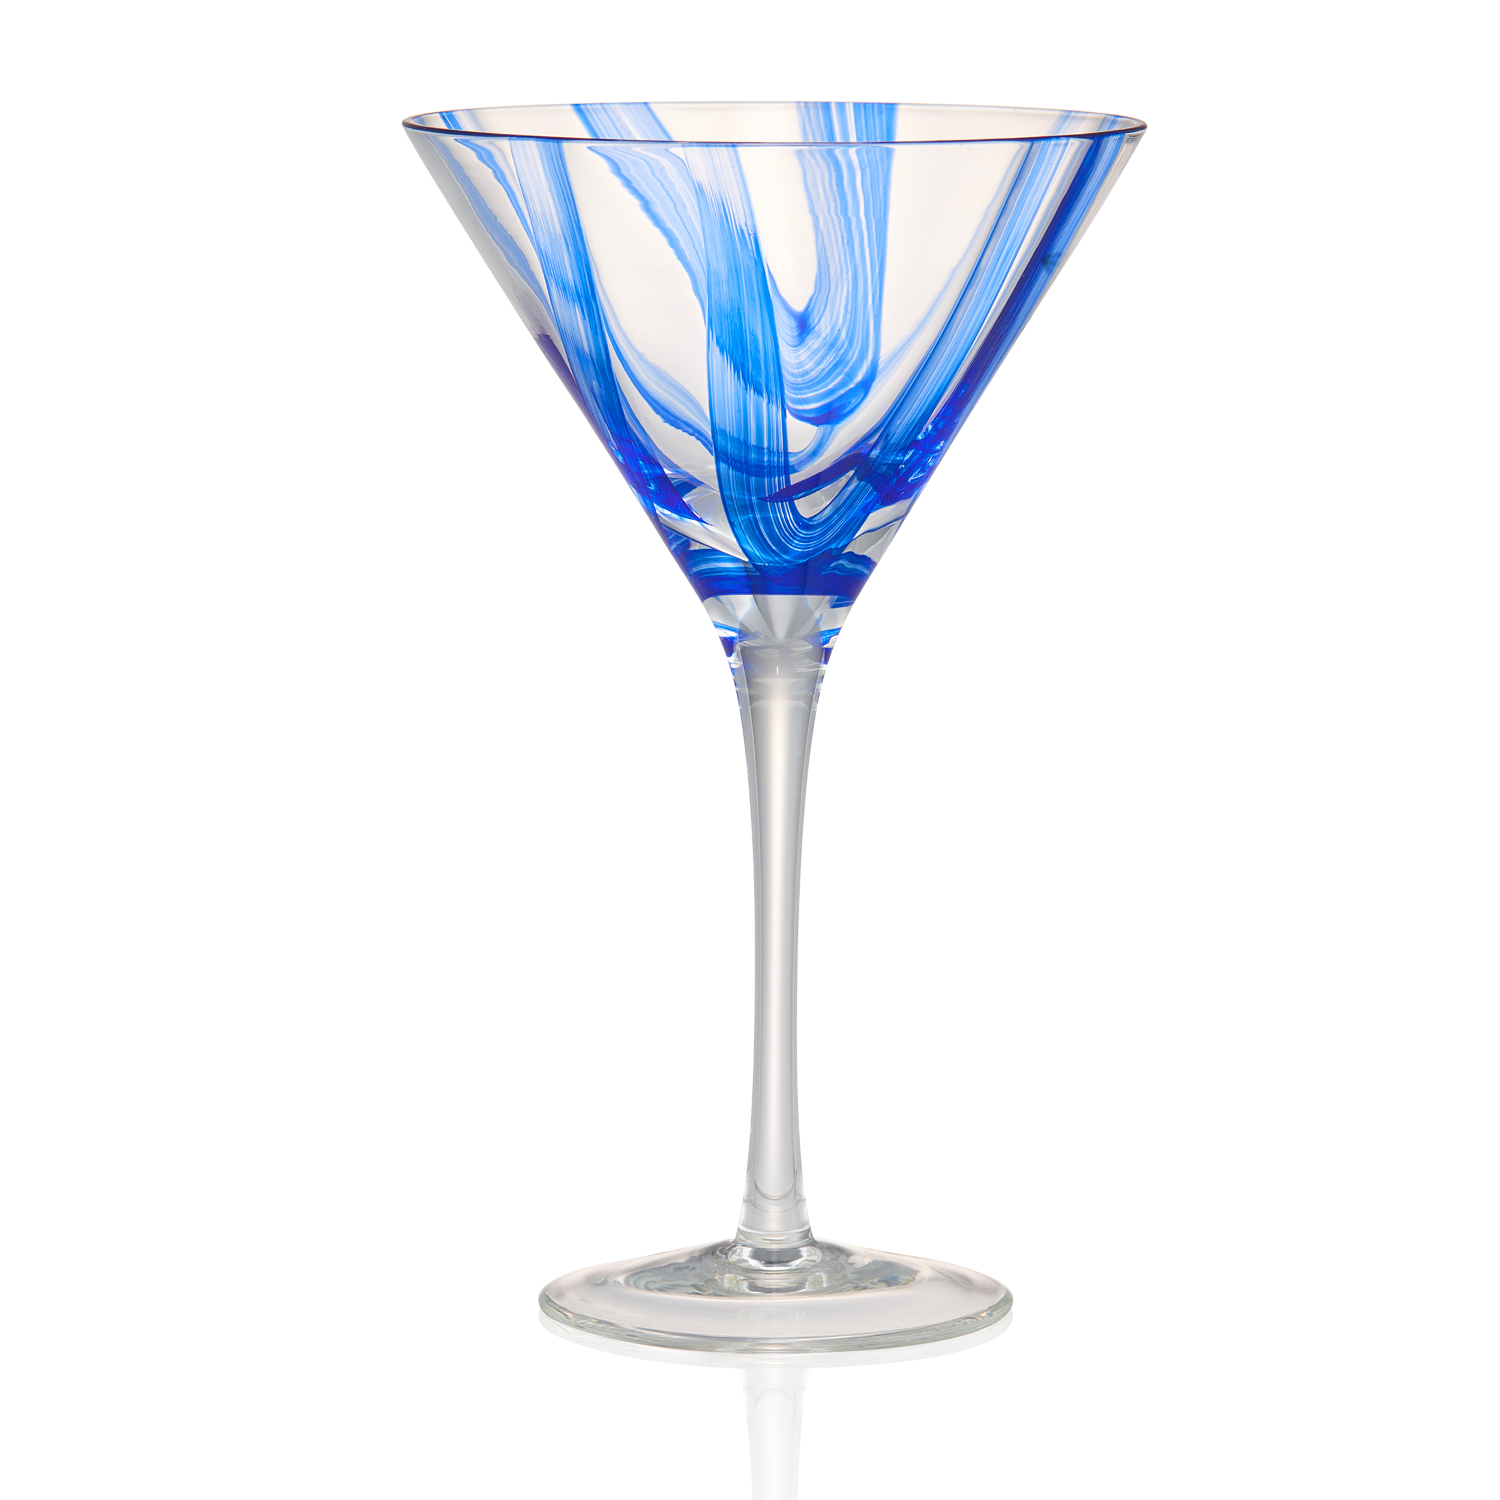 Artland 7 oz Midnight Black Martini Glasses, Set of 4